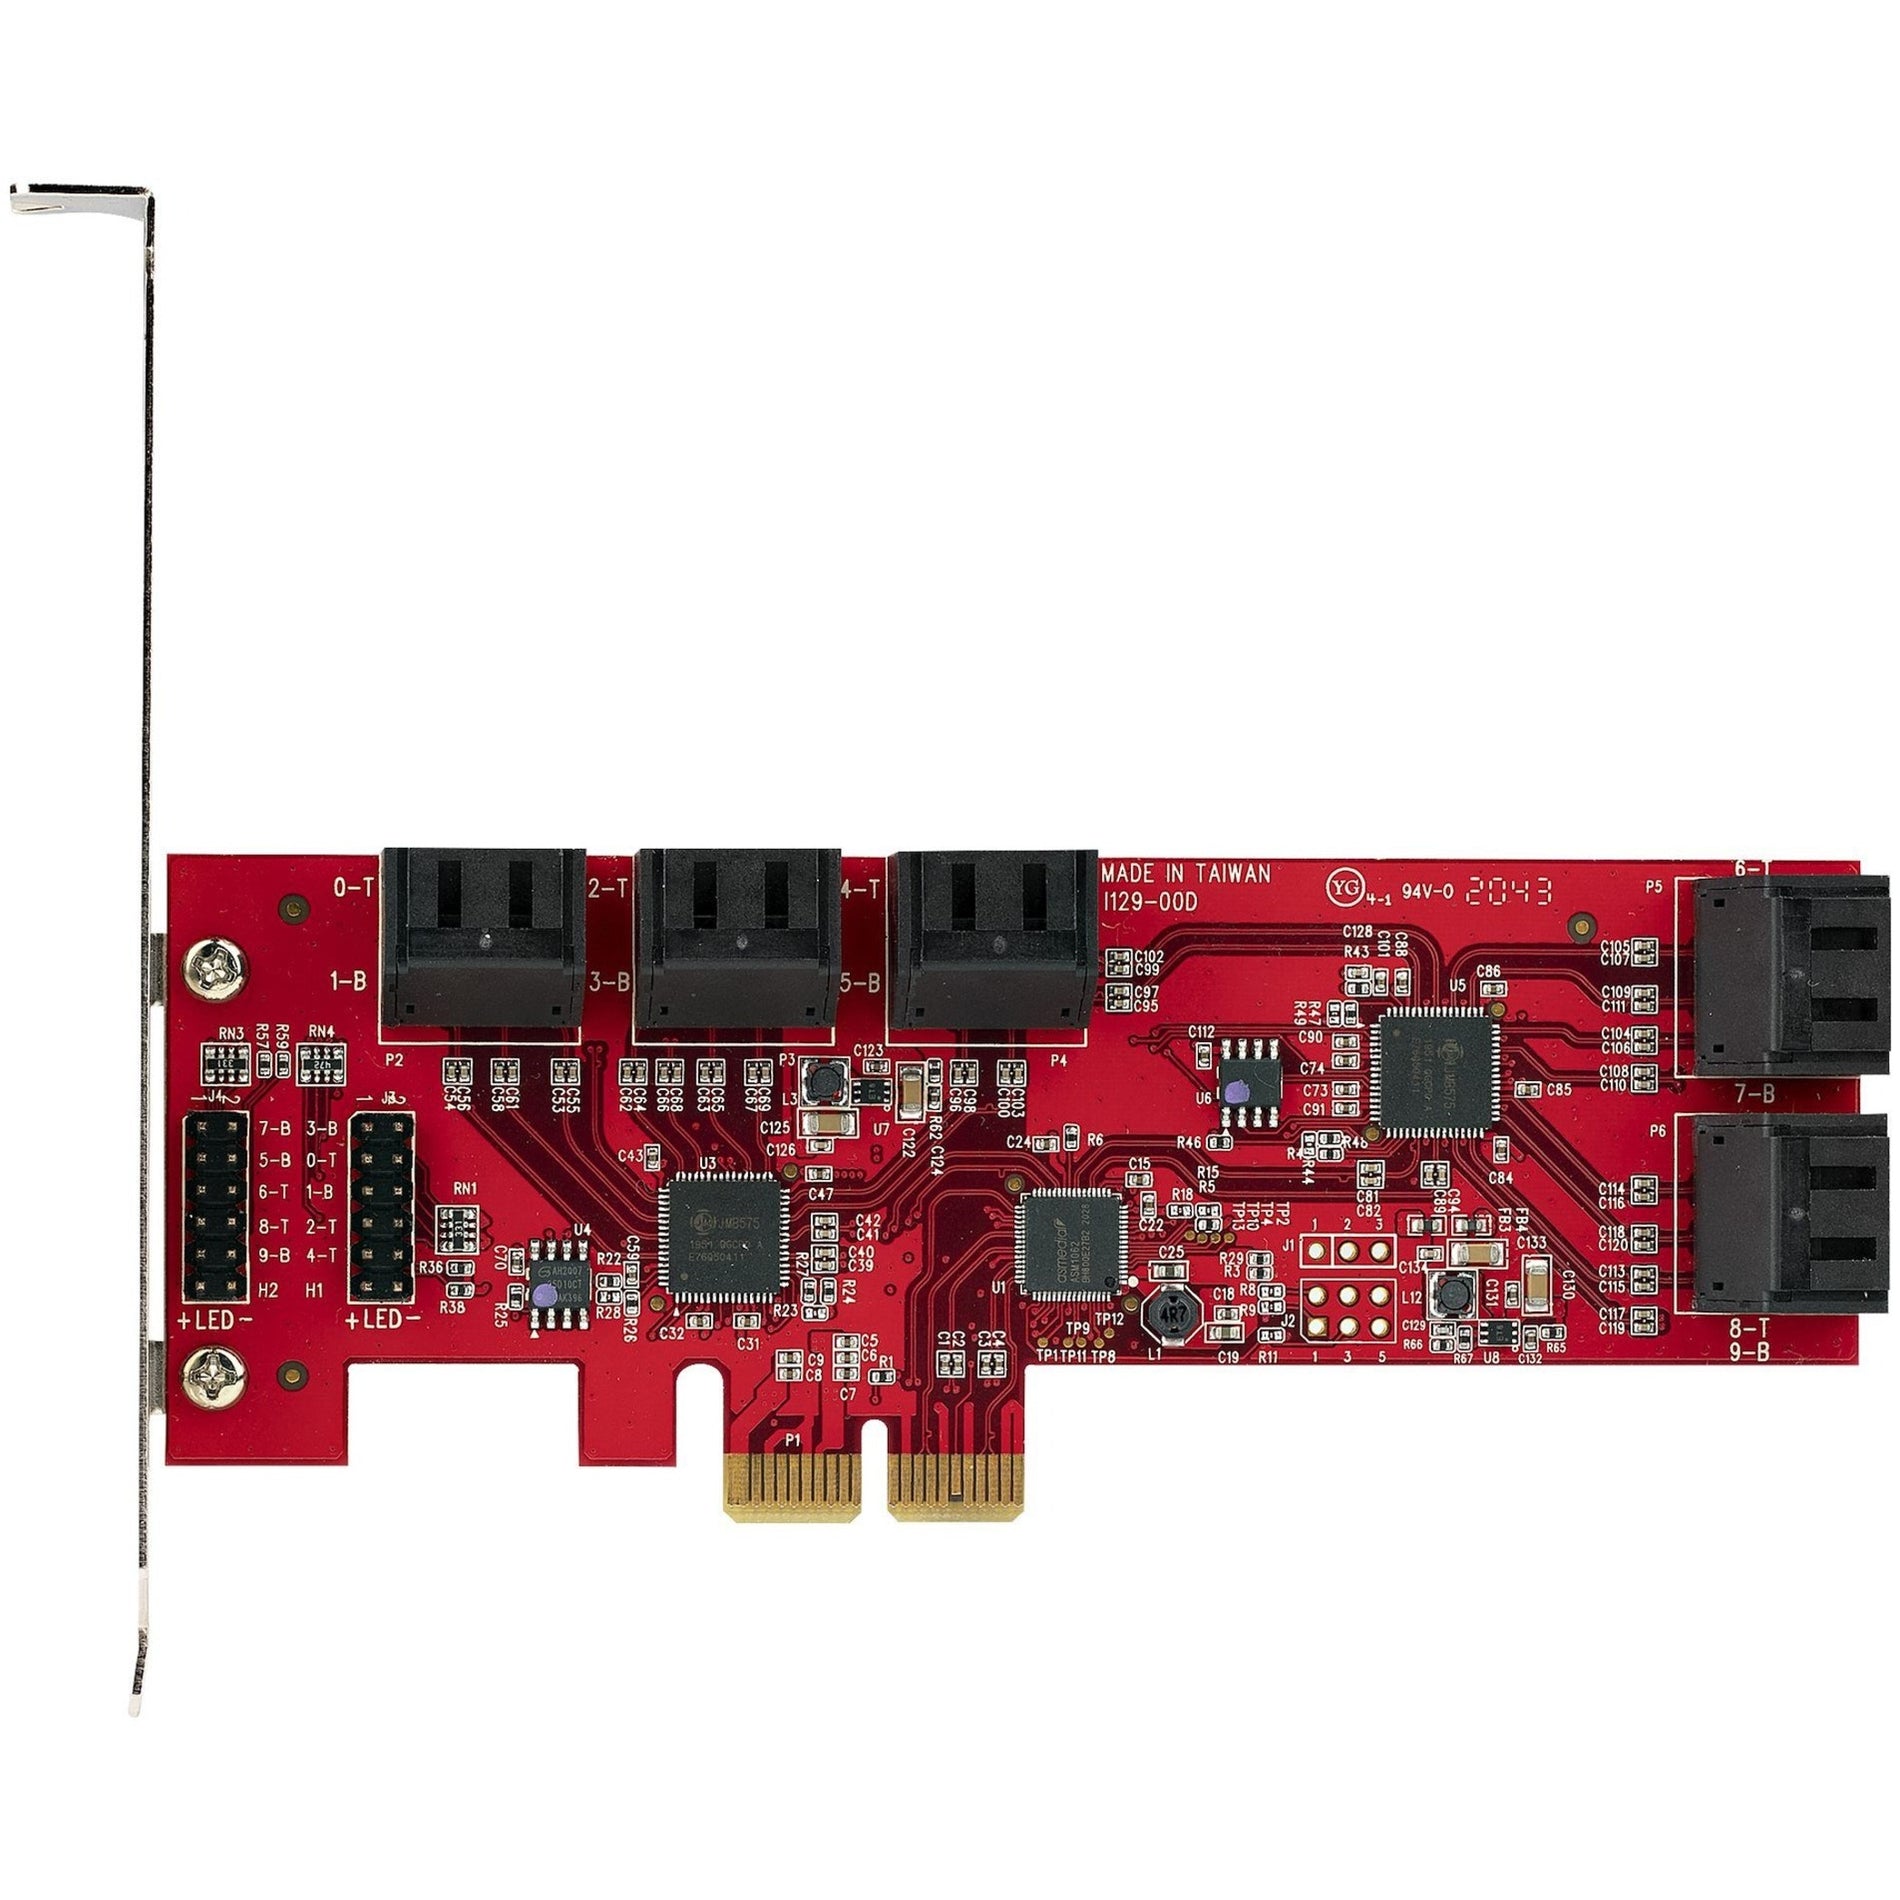 StarTech.com 10P6G-PCIE-SATA-CARD PCIe SATA Card, 10 Port SATA Expansion Card, 6Gbps SATA Adapter, 10 Mini-SAS/SATA Cables